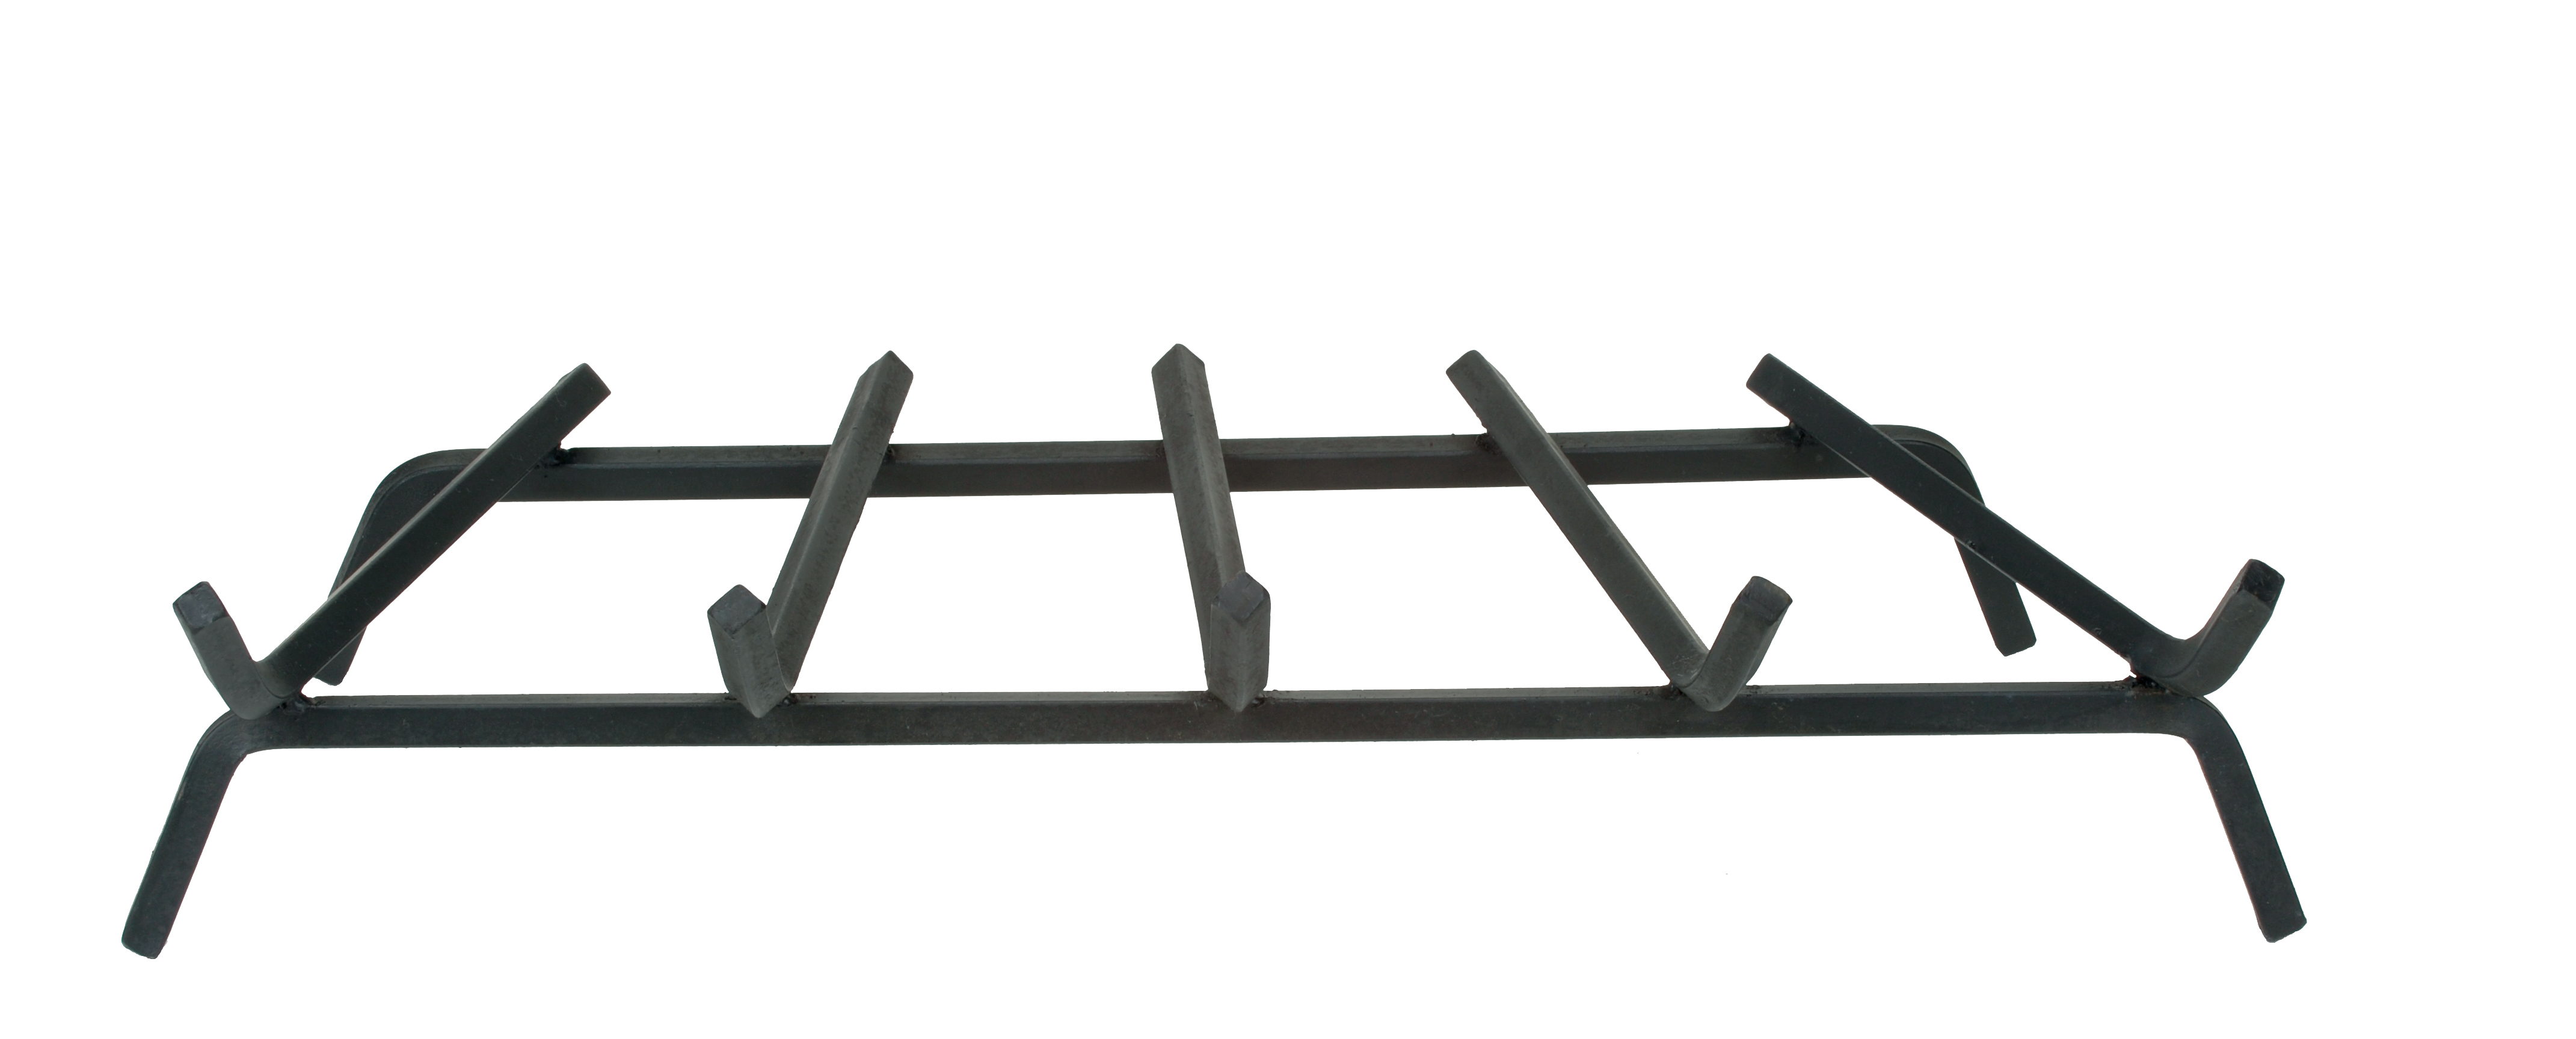 black steel 1/2 sq 4 bar grate product image